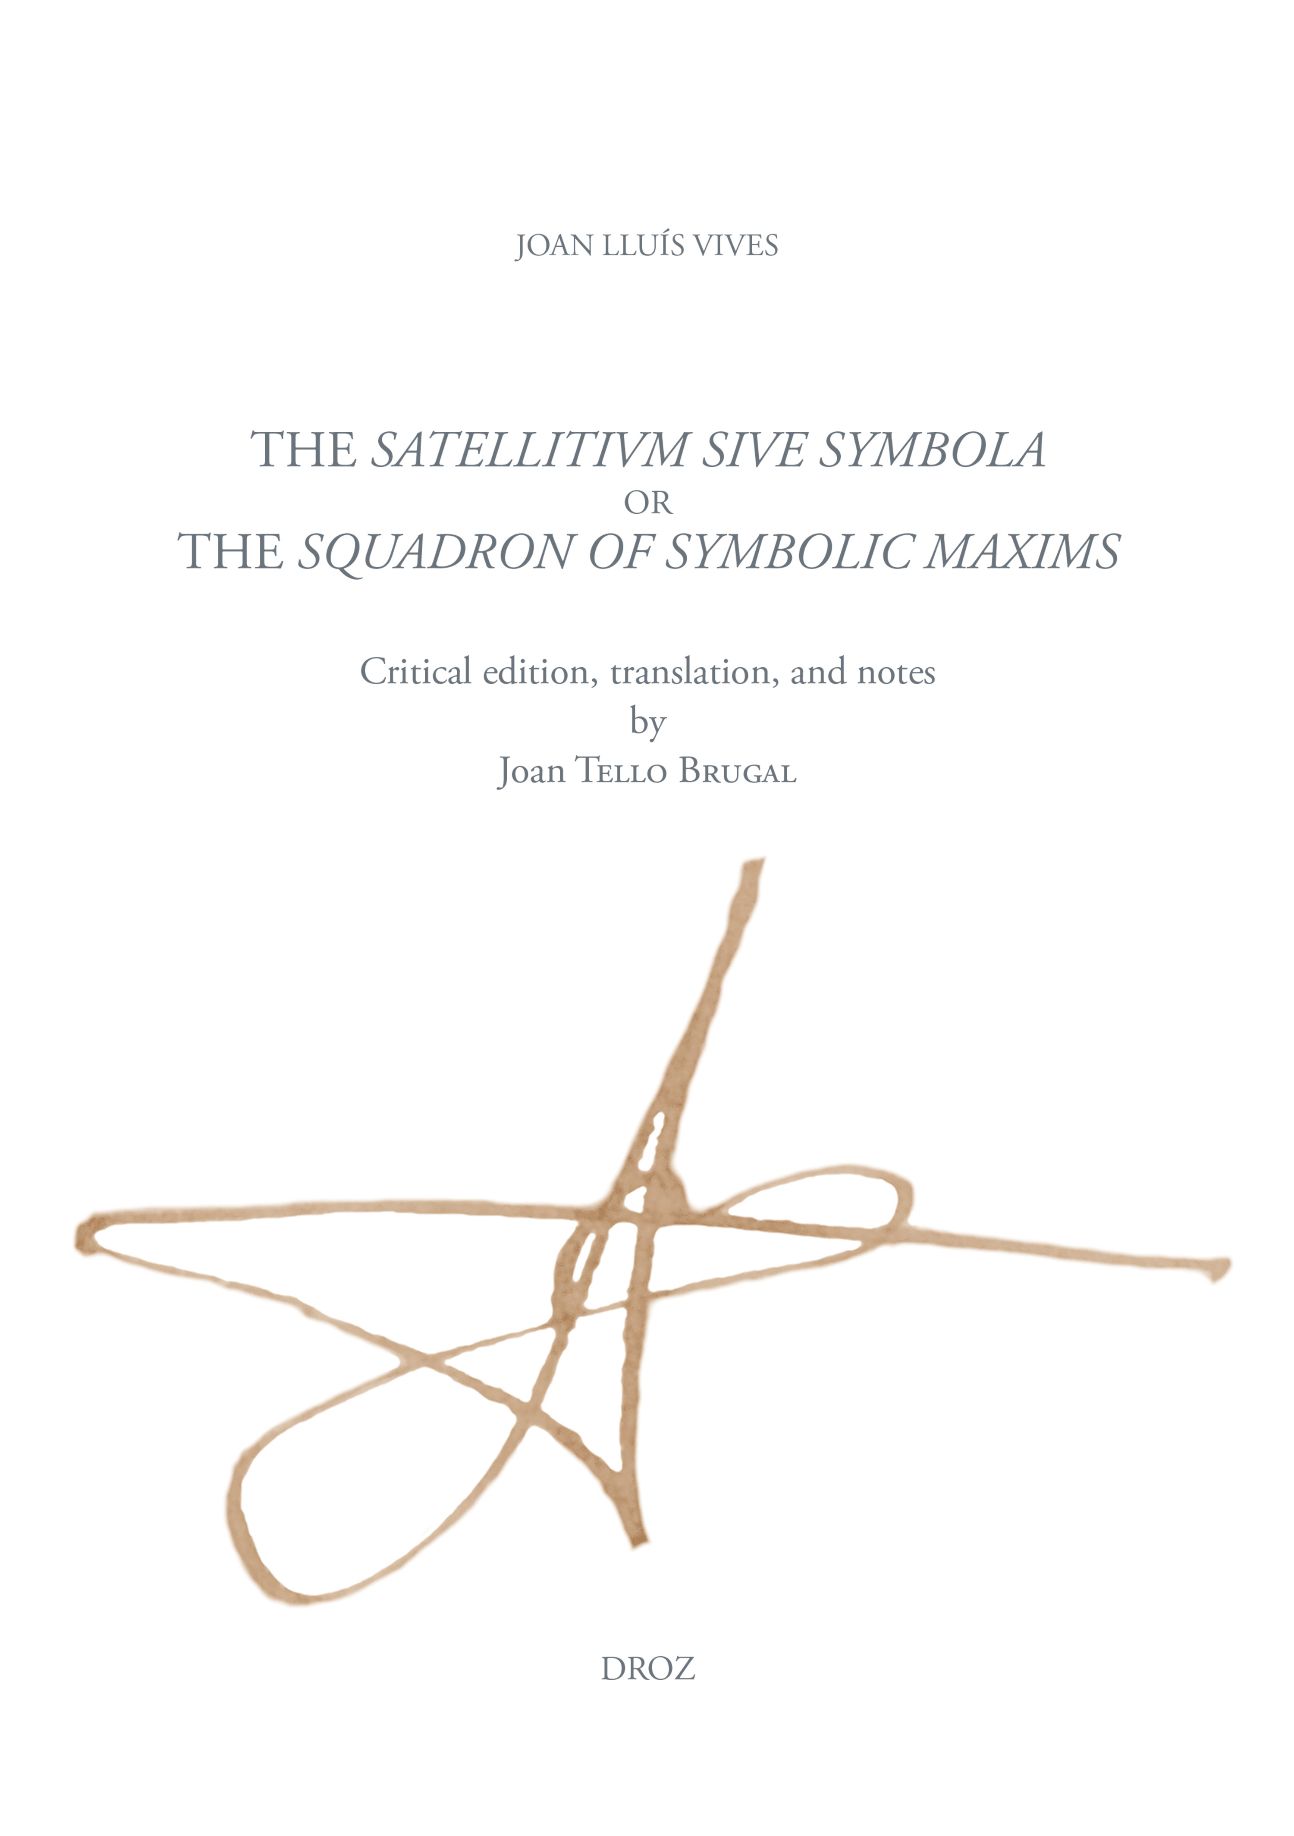 Joan Lluís Vives, Joan Tello Brugal (éd.), The Satellitium siue symbola, or the Squadron of symbolic maxims